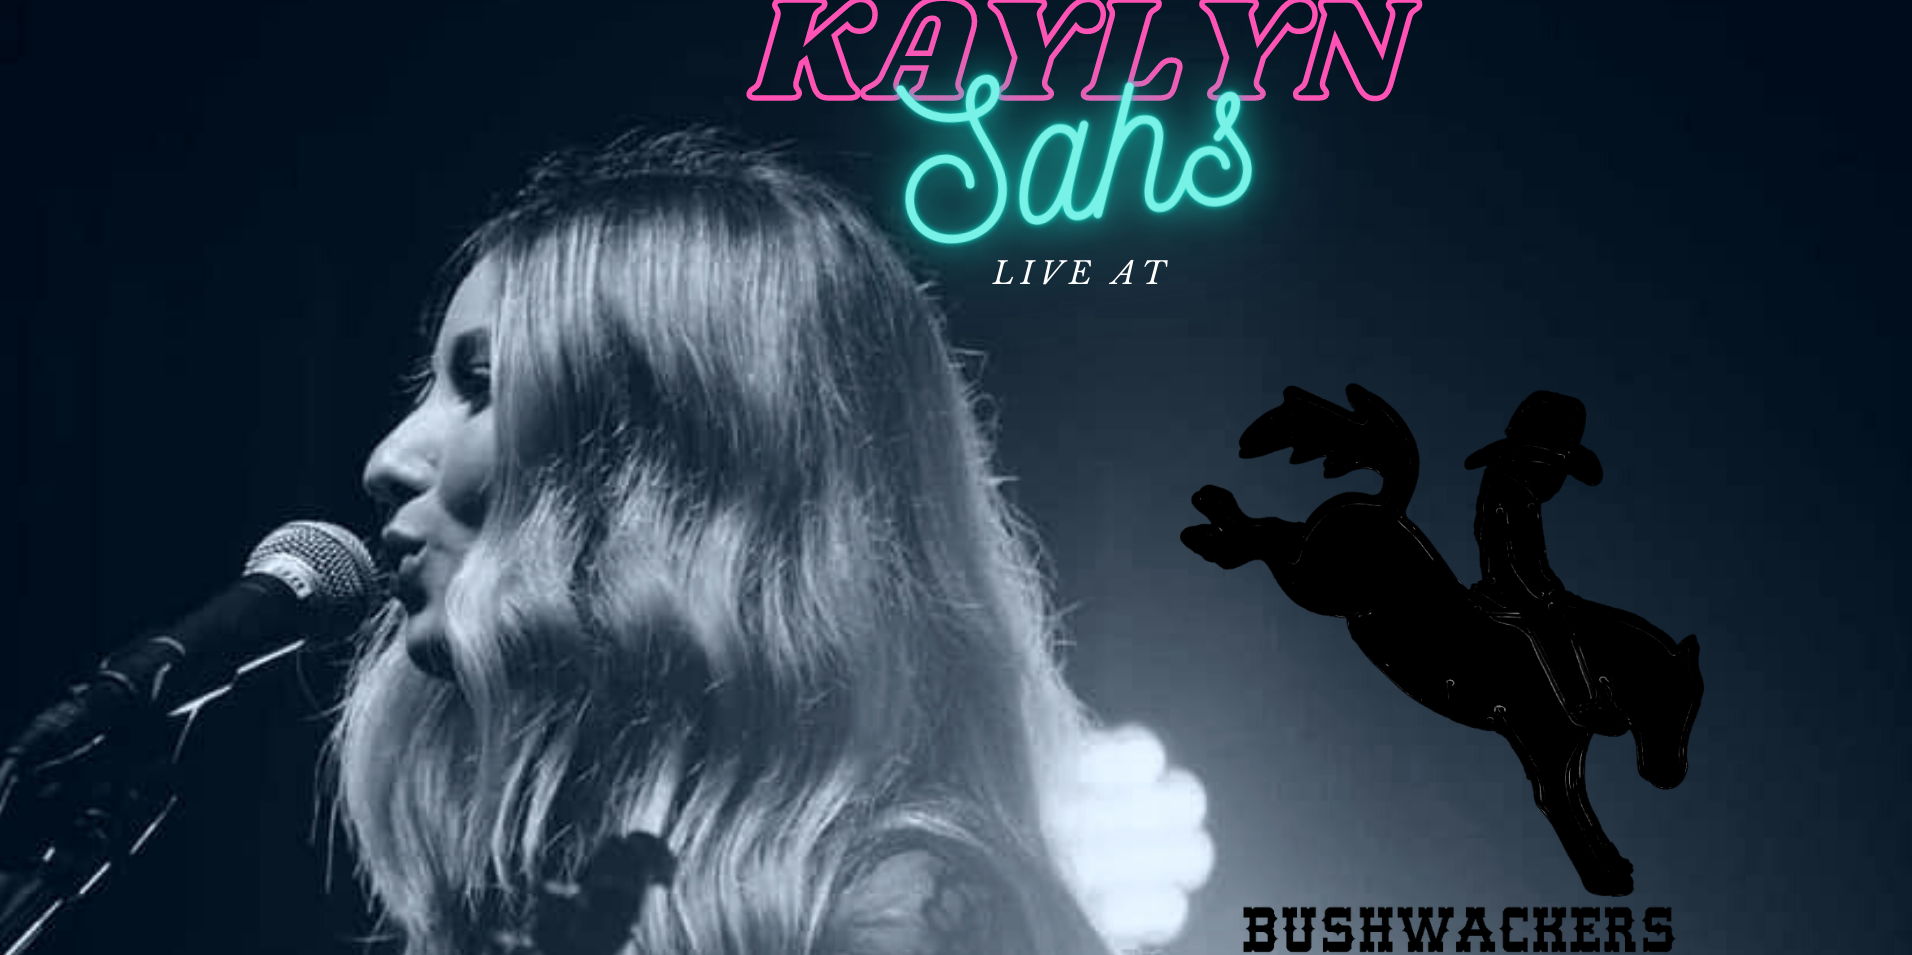 Bushwackers Live: Kaylyn Sahs & Band promotional image